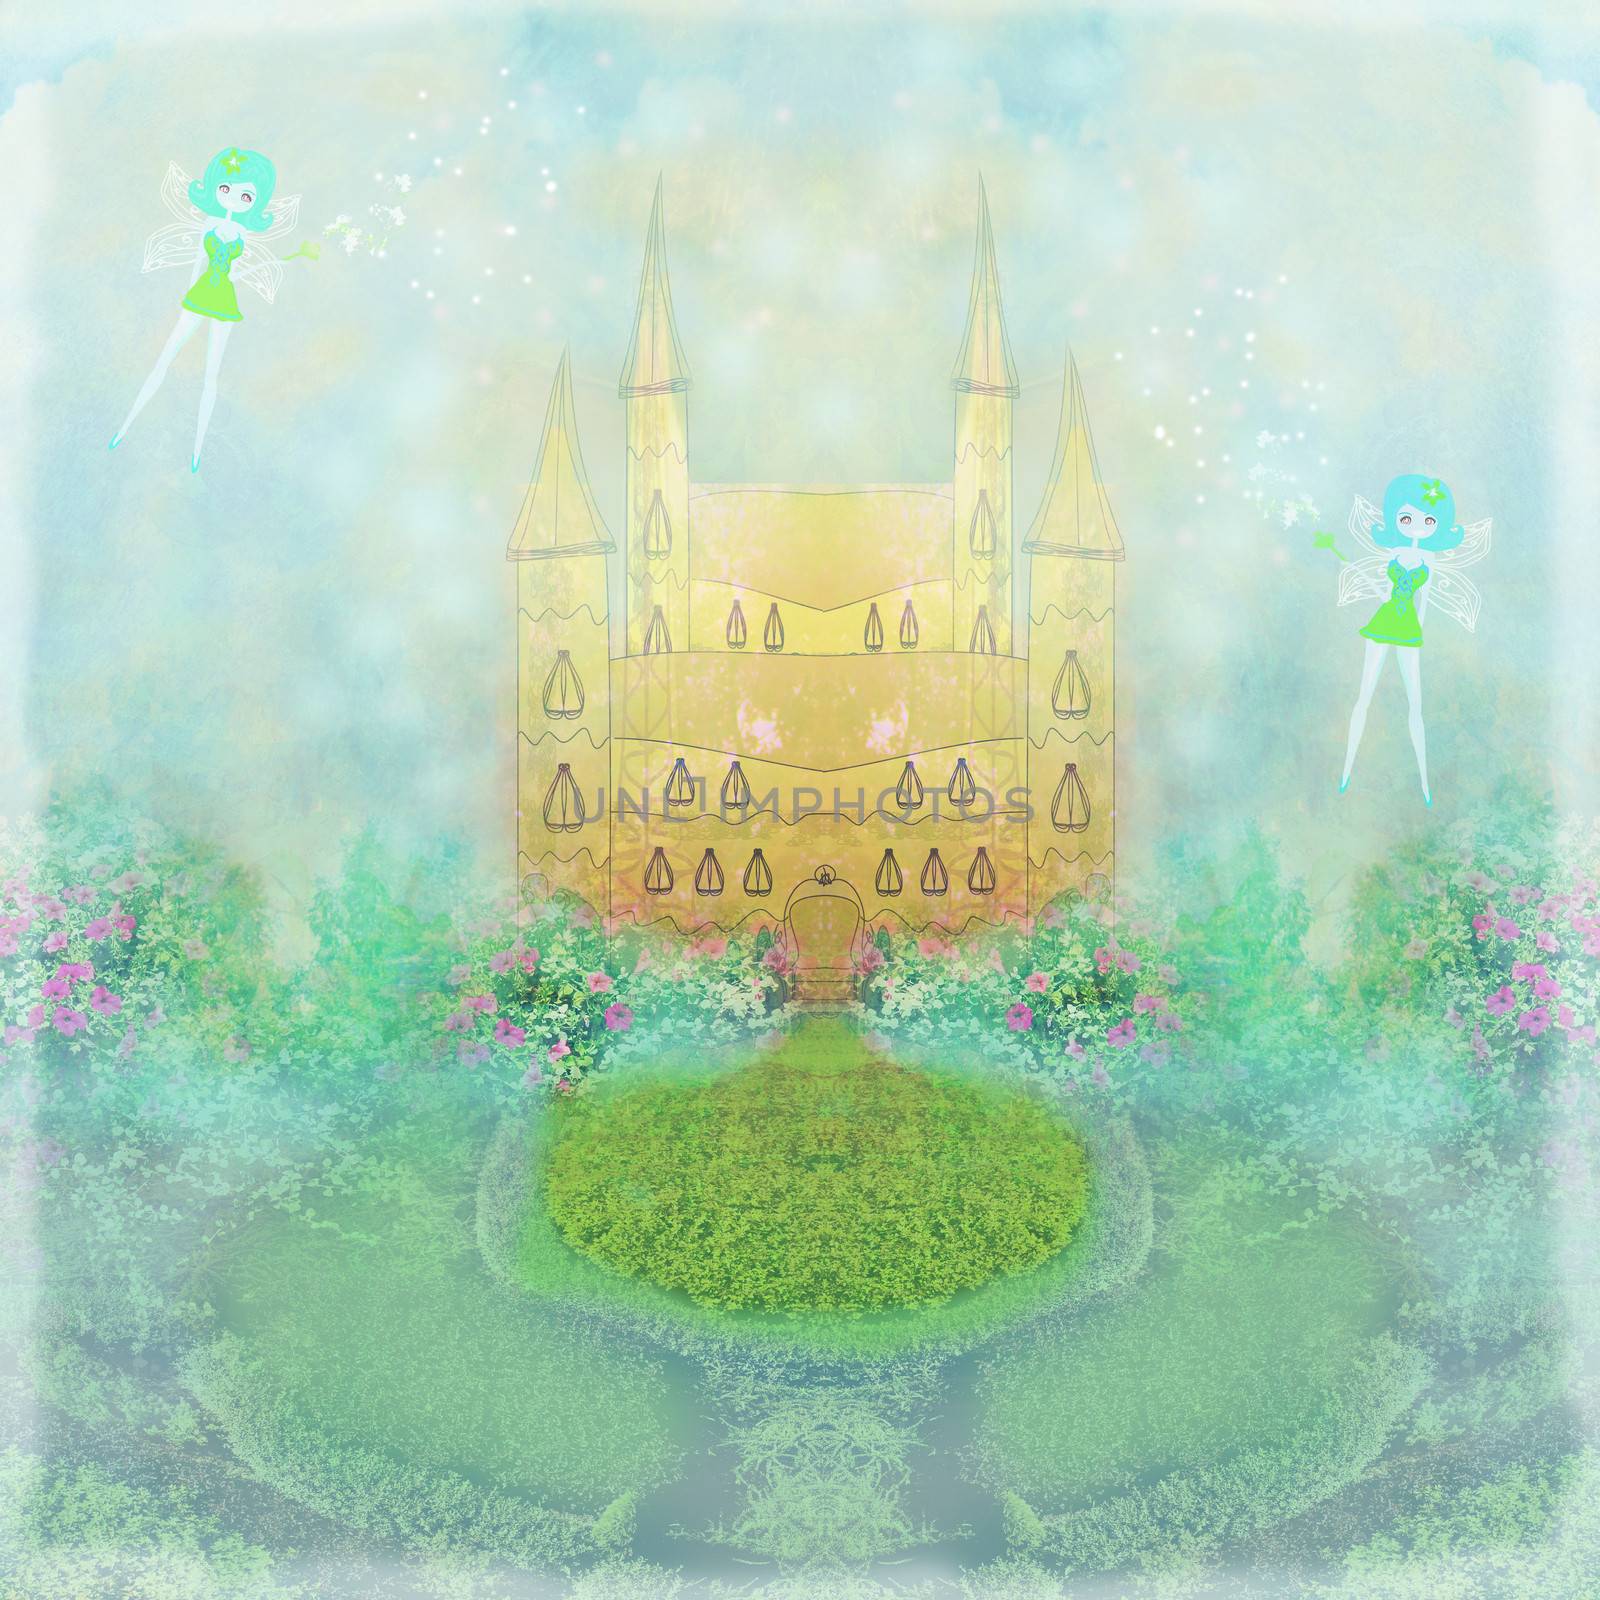 Magic Fairy Tale Princess Castle